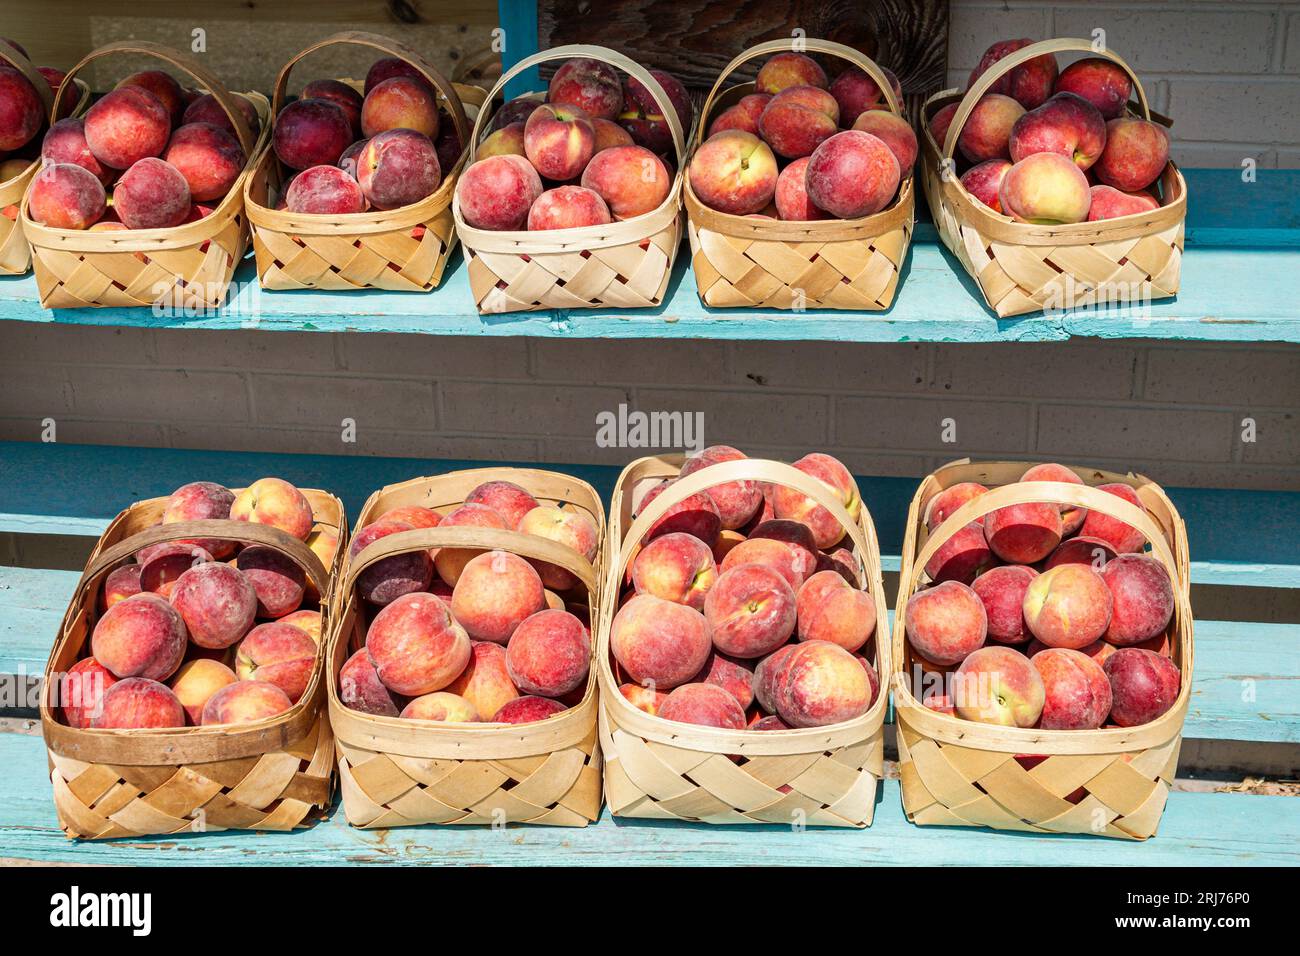 York South Carolina,The Peach Tree,baskets produce peaches,business shop merchant market marketplace,selling buying,shopping shopper economy Stock Photo